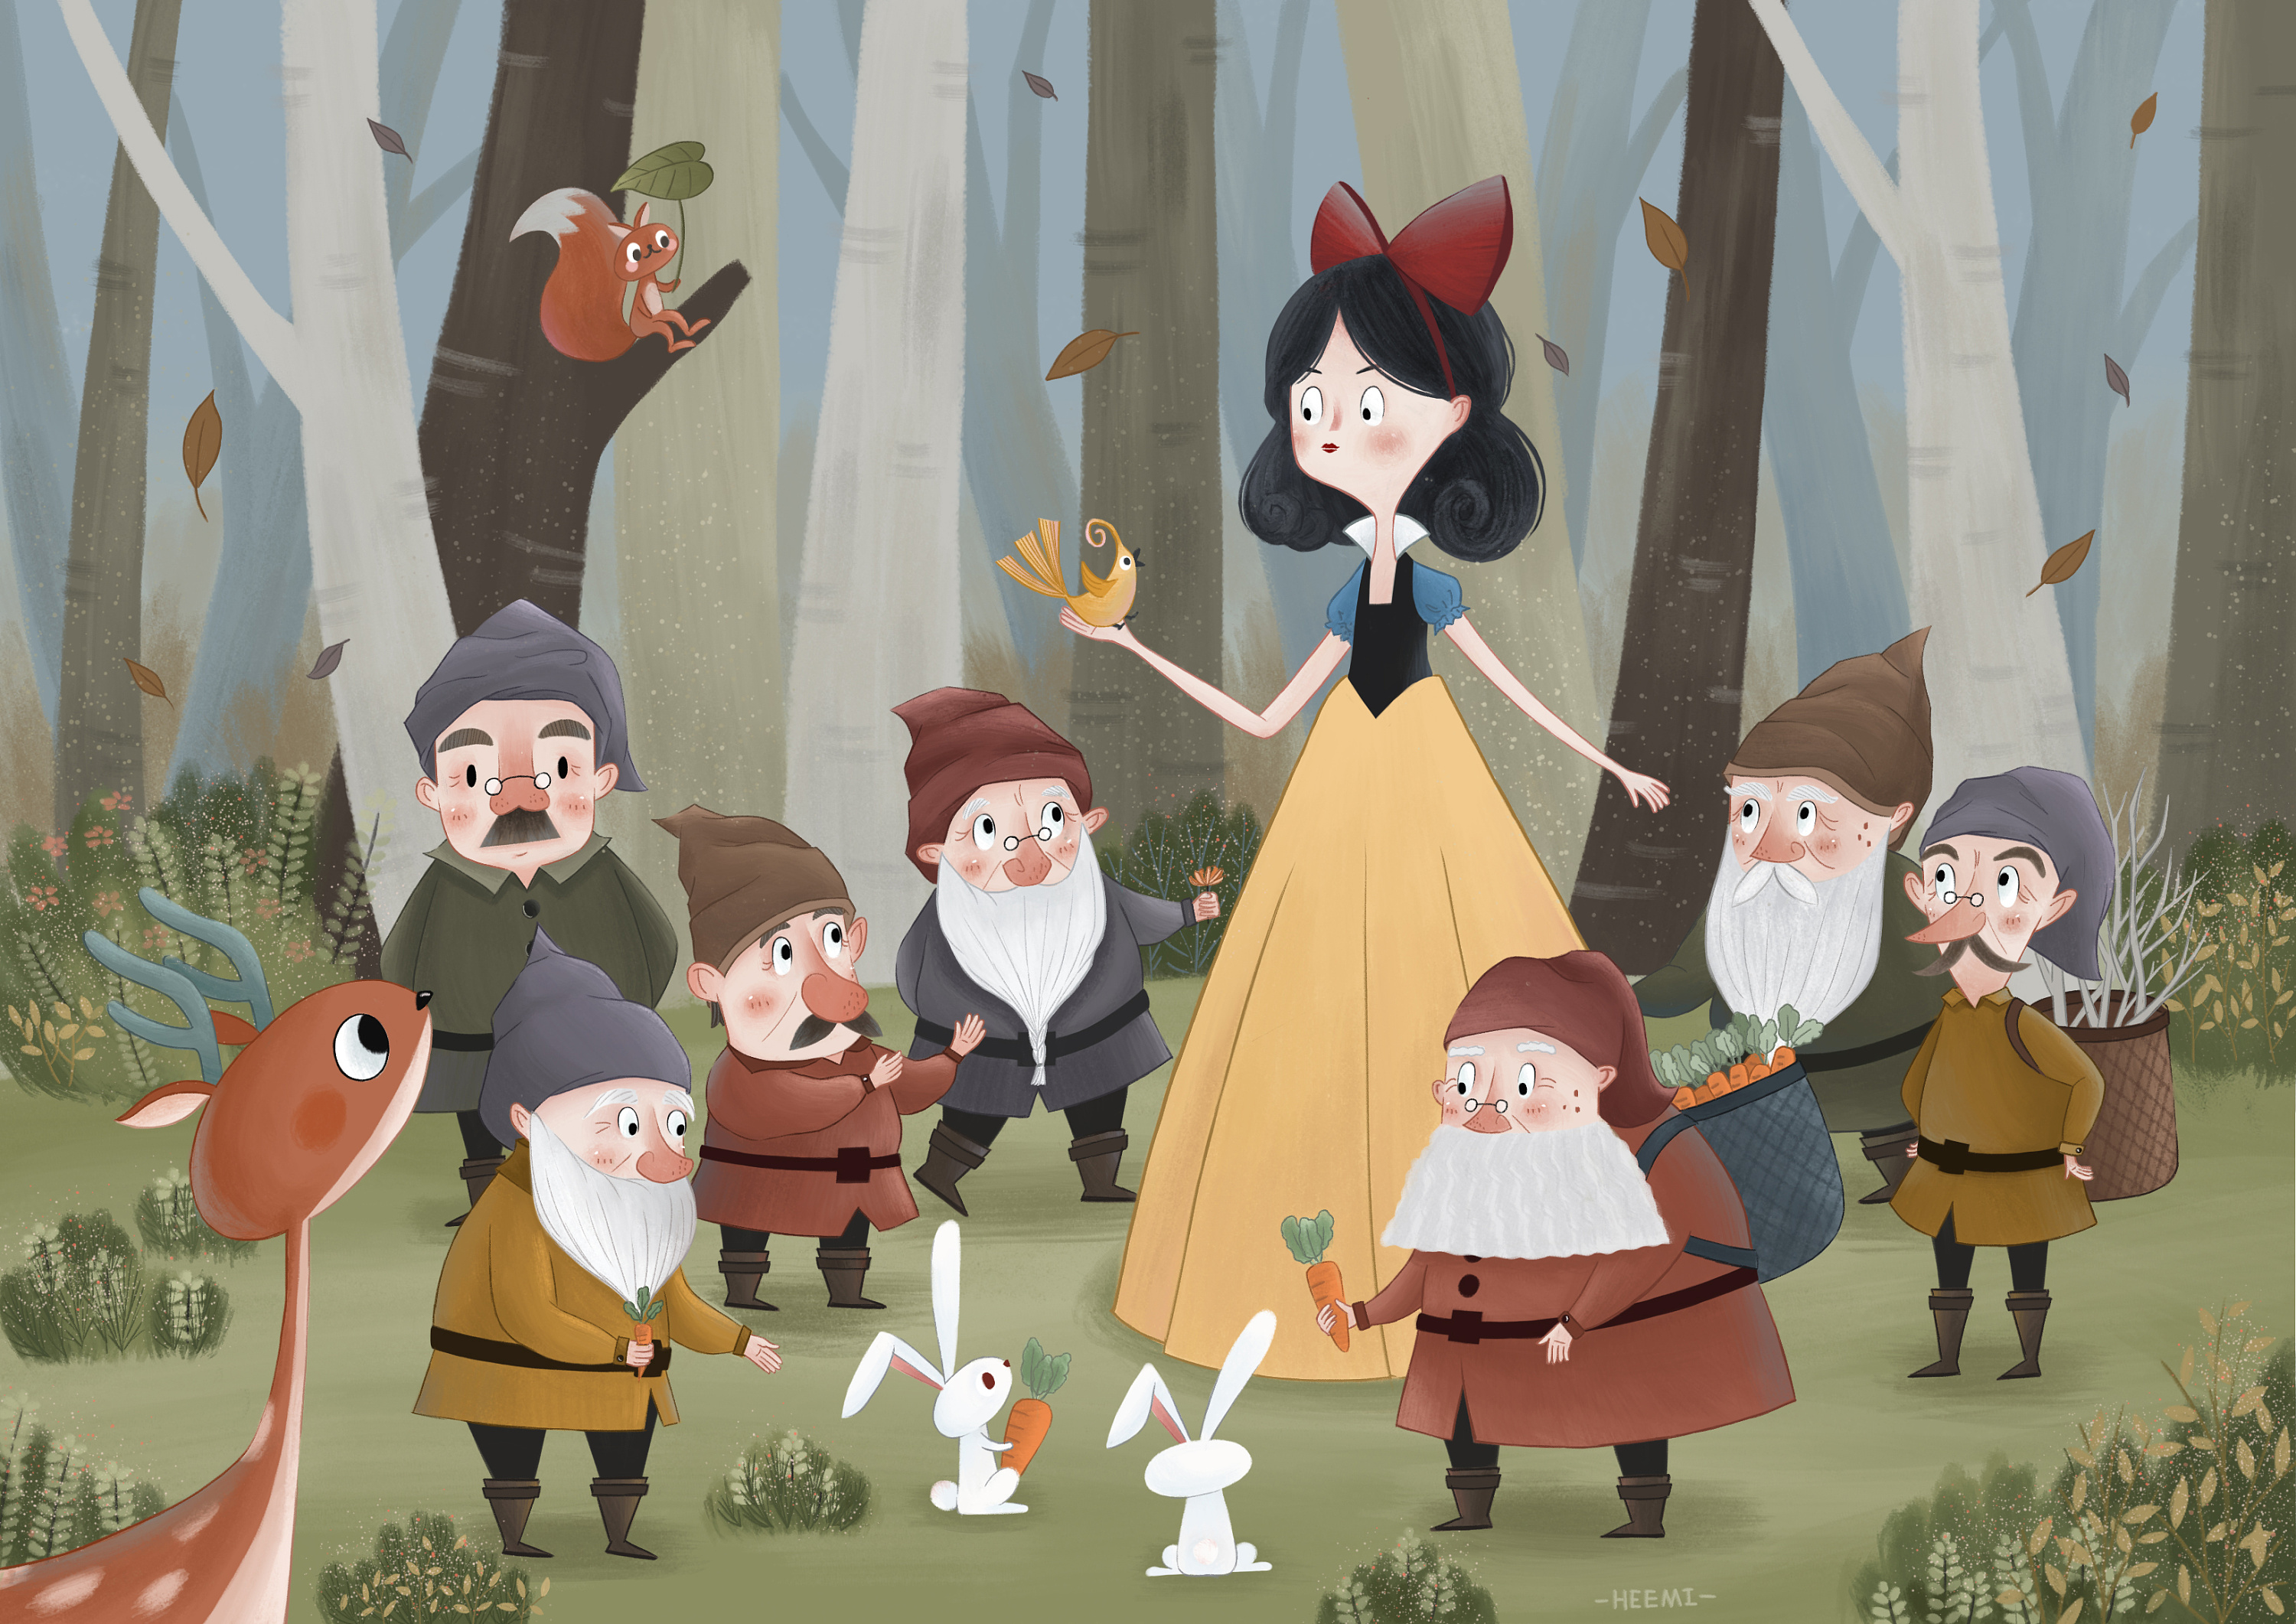 Snow White and the Seven Dwarfs Wallpaper - Classic Disney Wallpaper ...